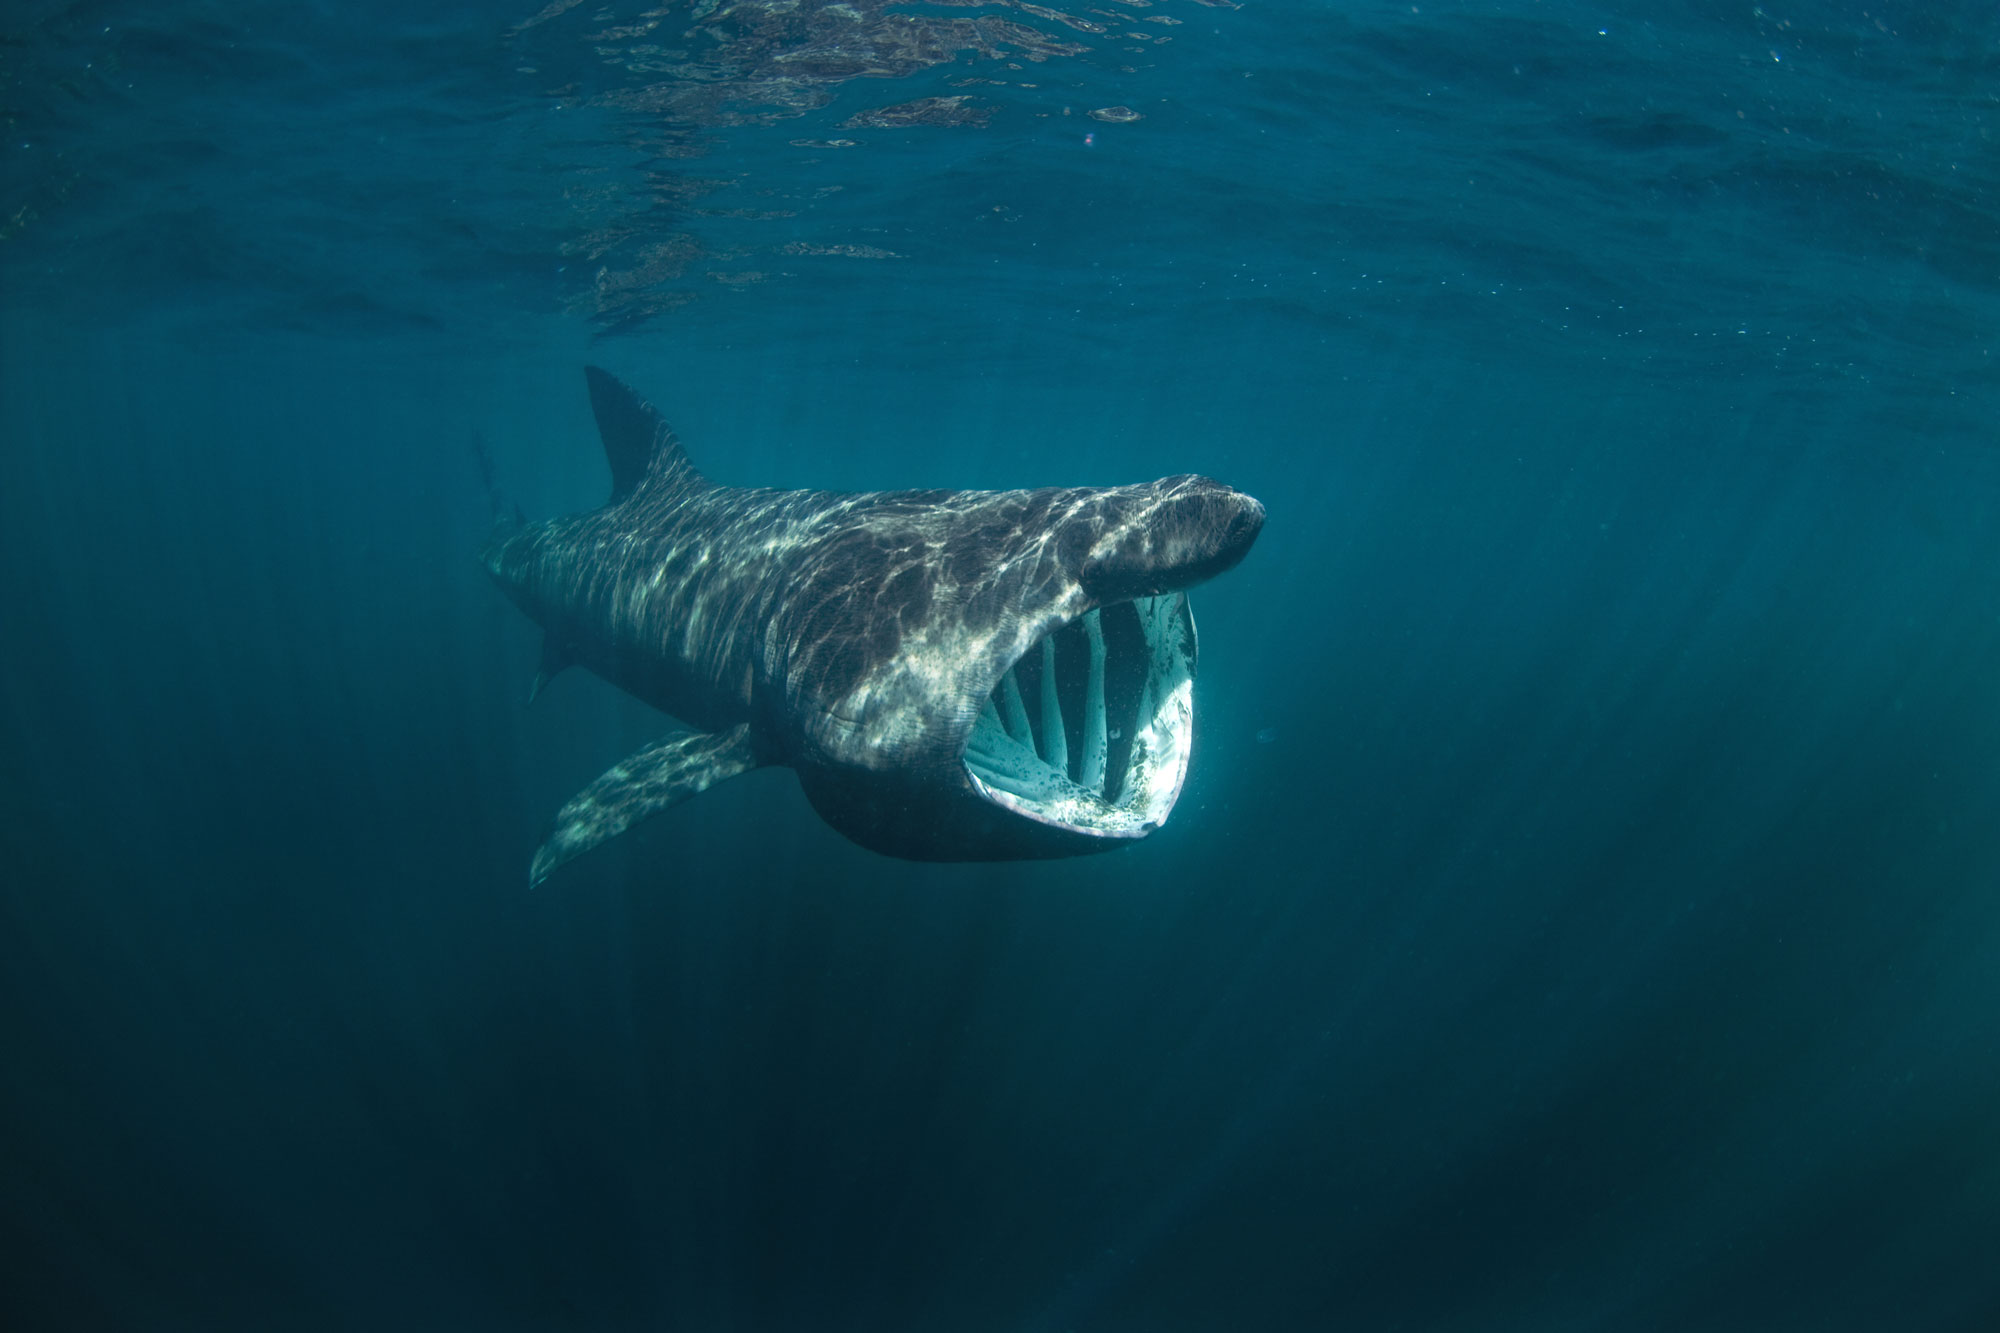 Basking shark off the coast of Scotland